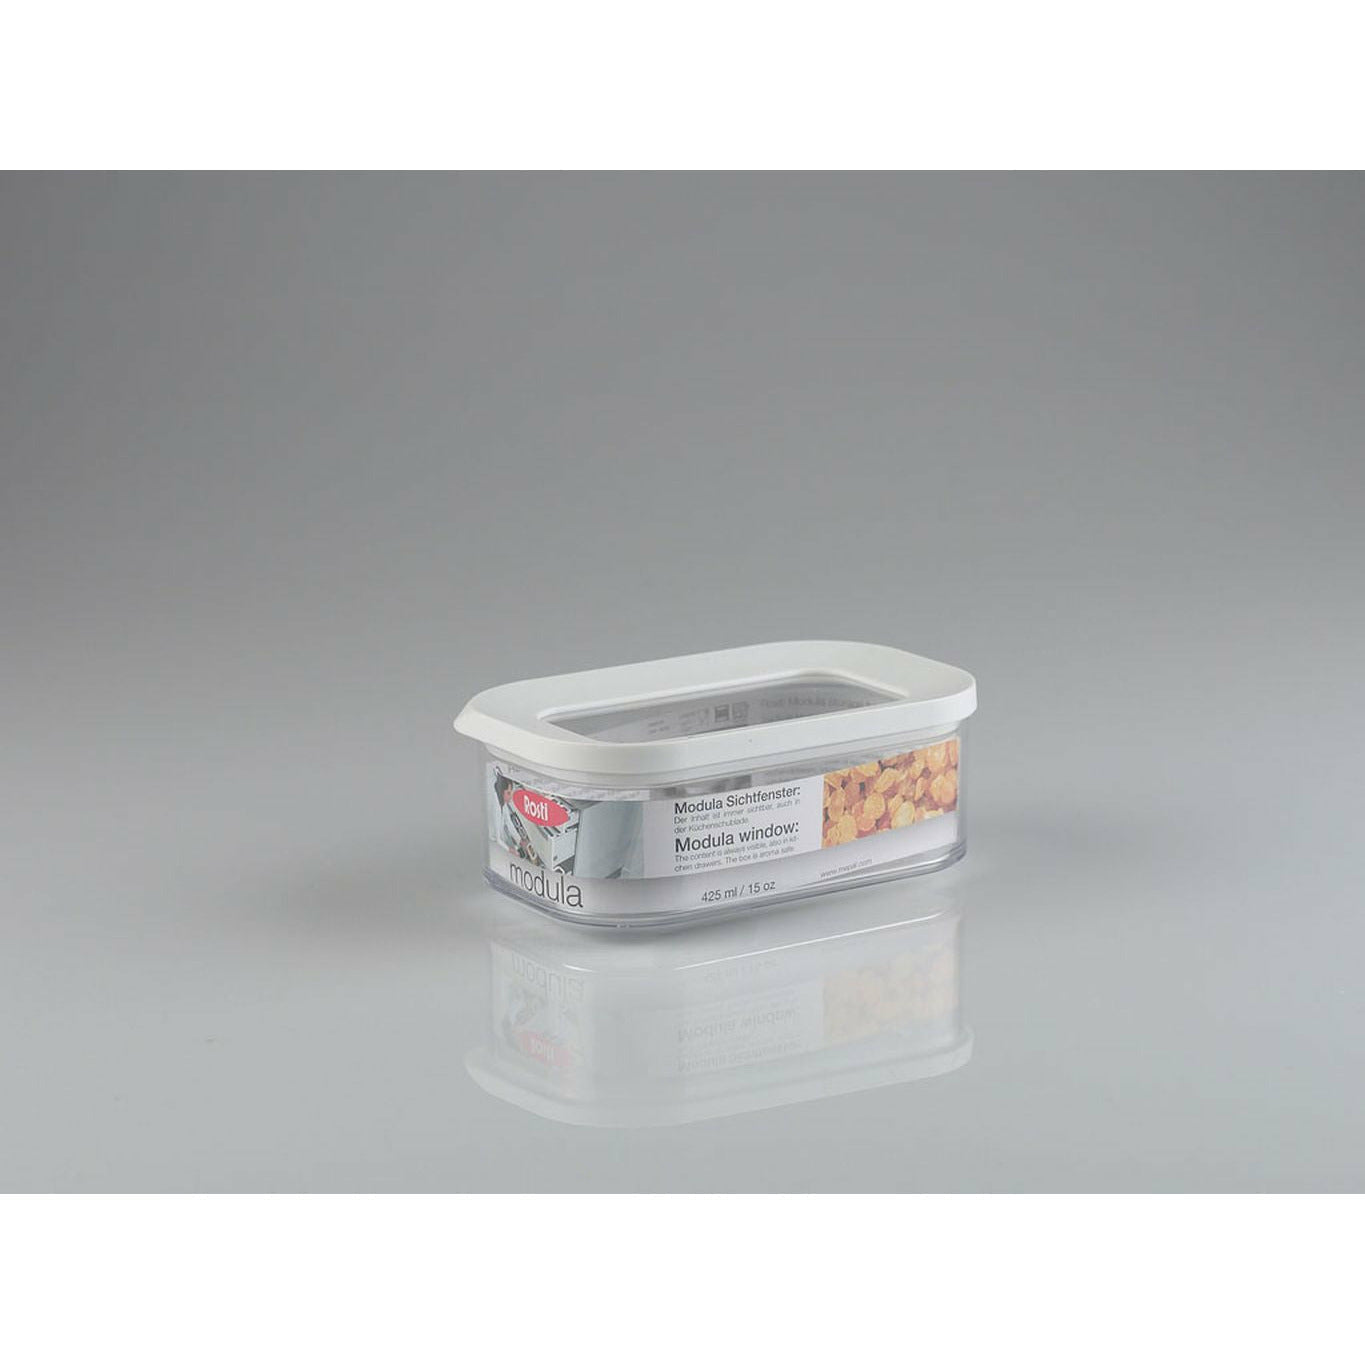 Box de almacenamiento de módula de mepal 0,4 L, transparente